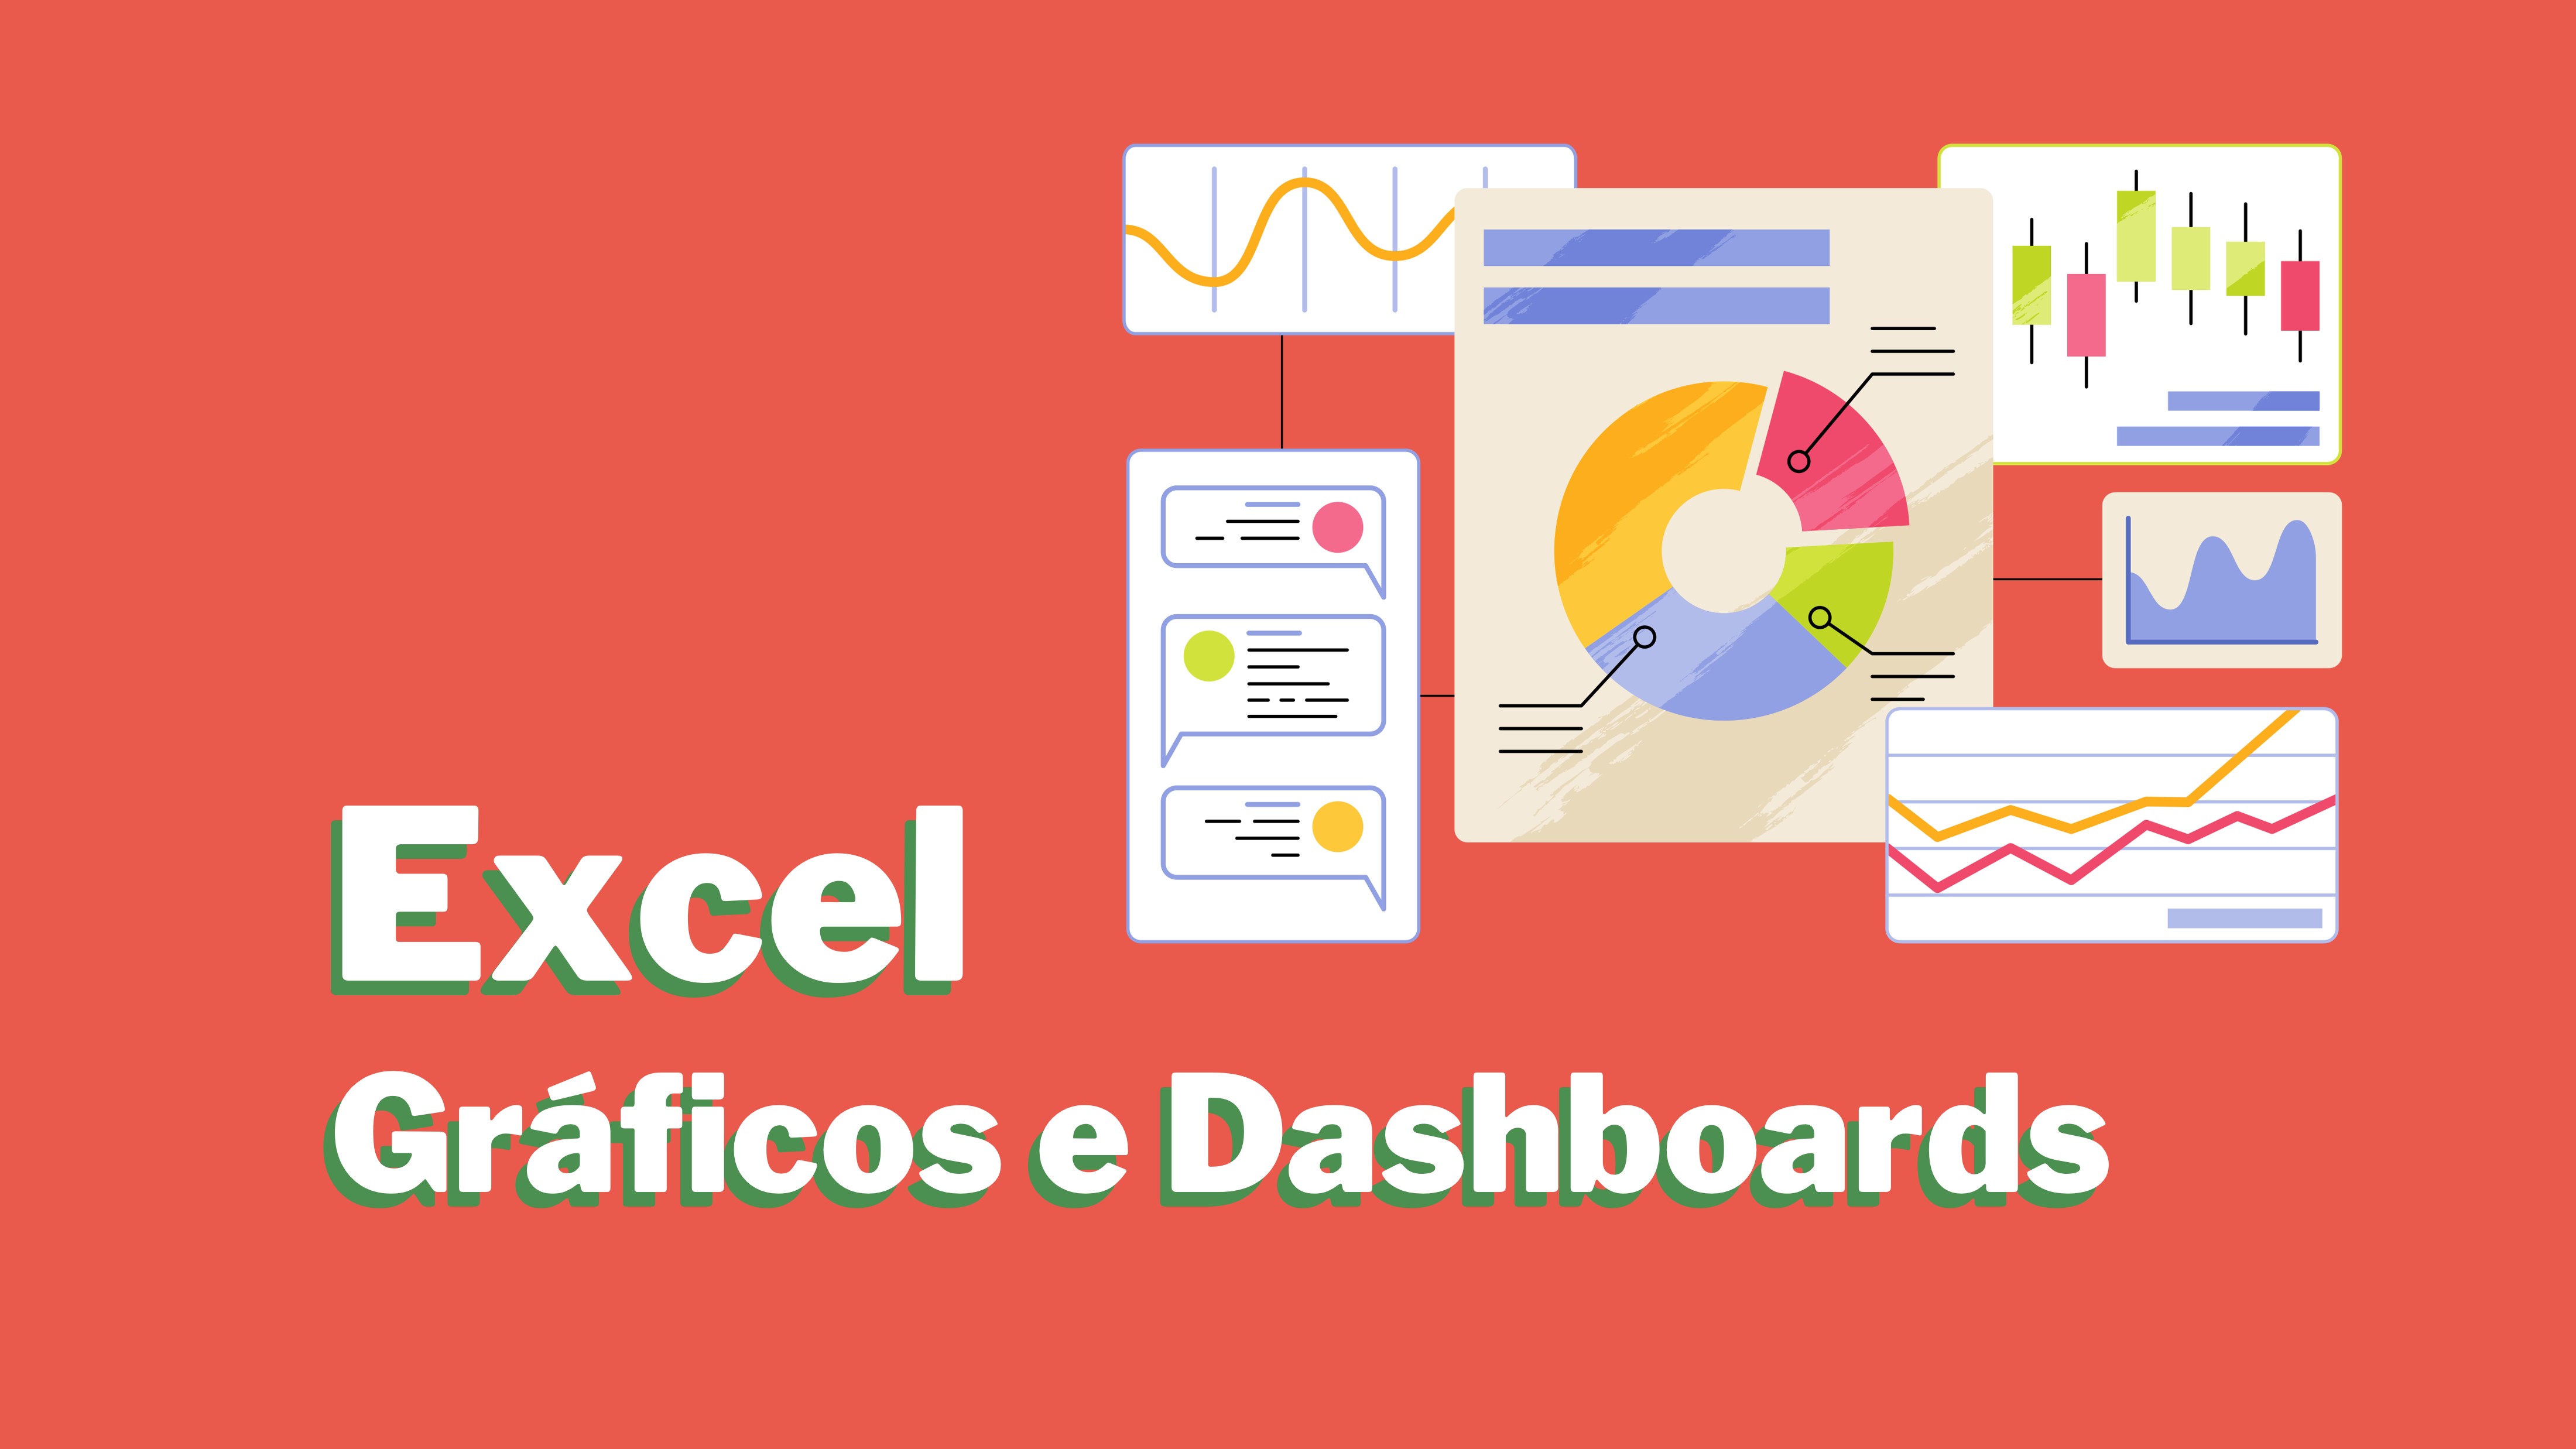 Excel: Gráficos e dashboards